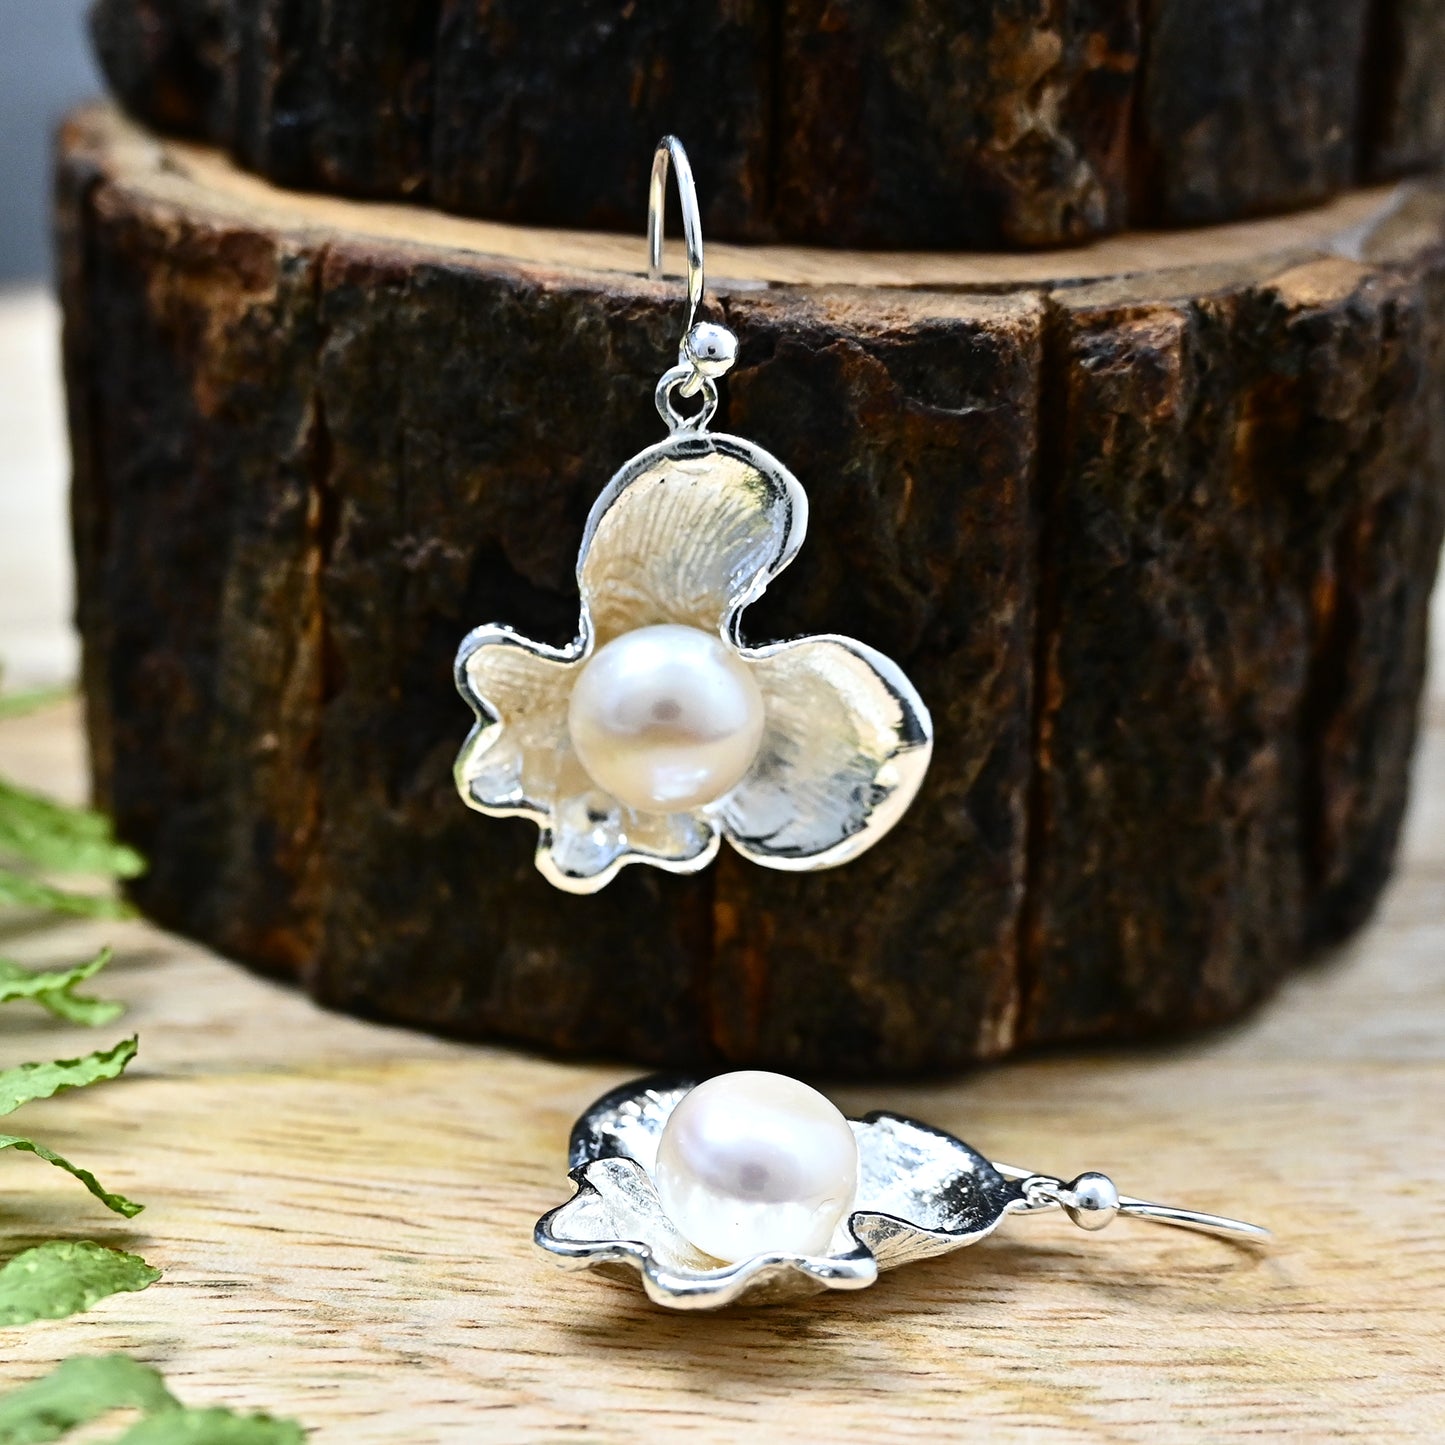 Flower with Pearl Earrings! 🌸✨